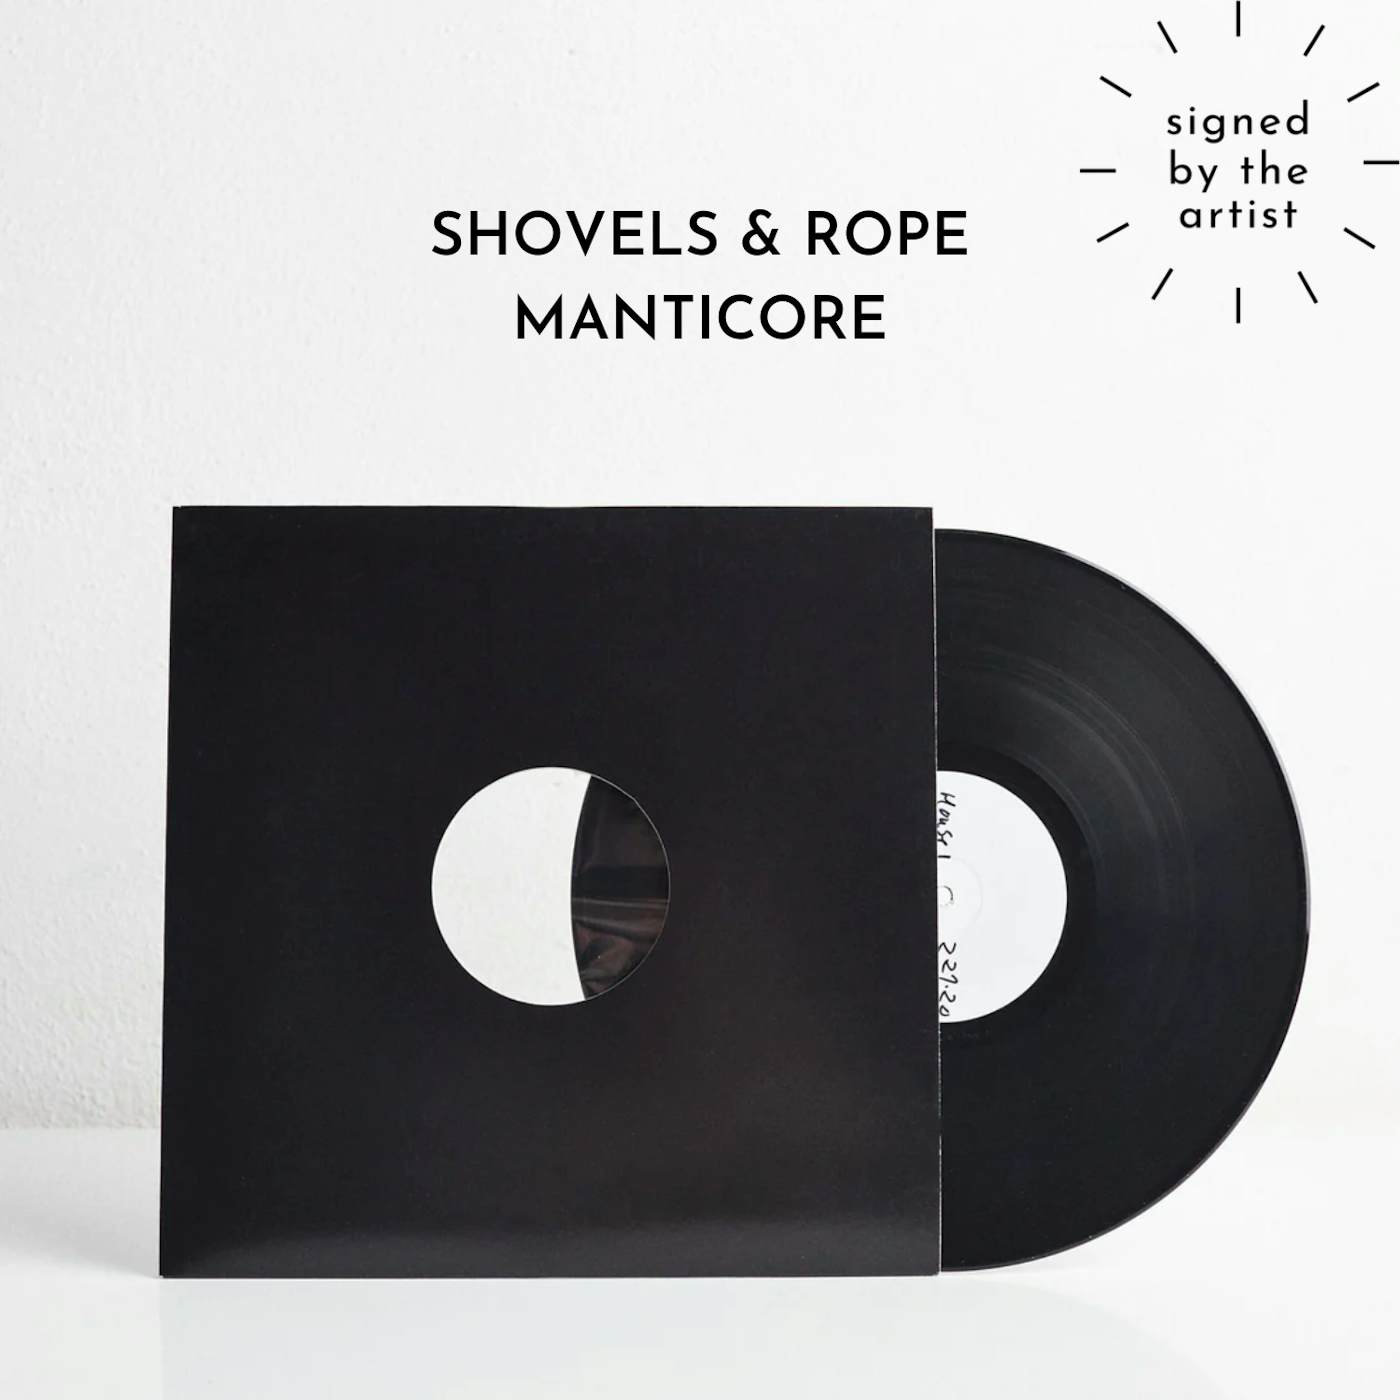 Shovels & Rope Manticore (Signed Vinyl Test Pressing)